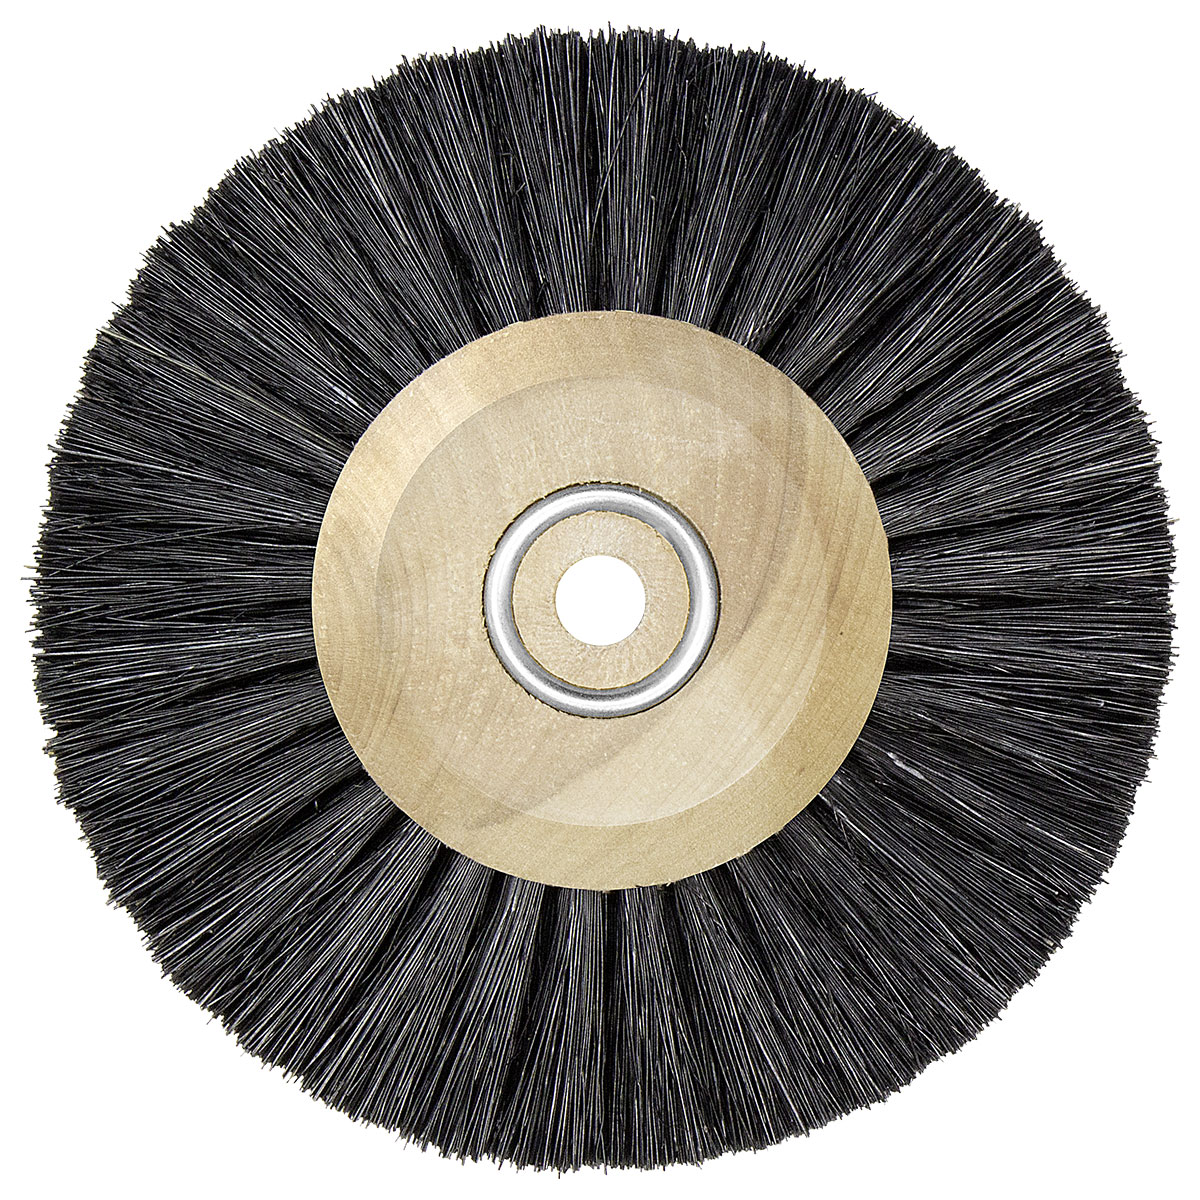 Wheel brush bristle 3 rows 70 mm